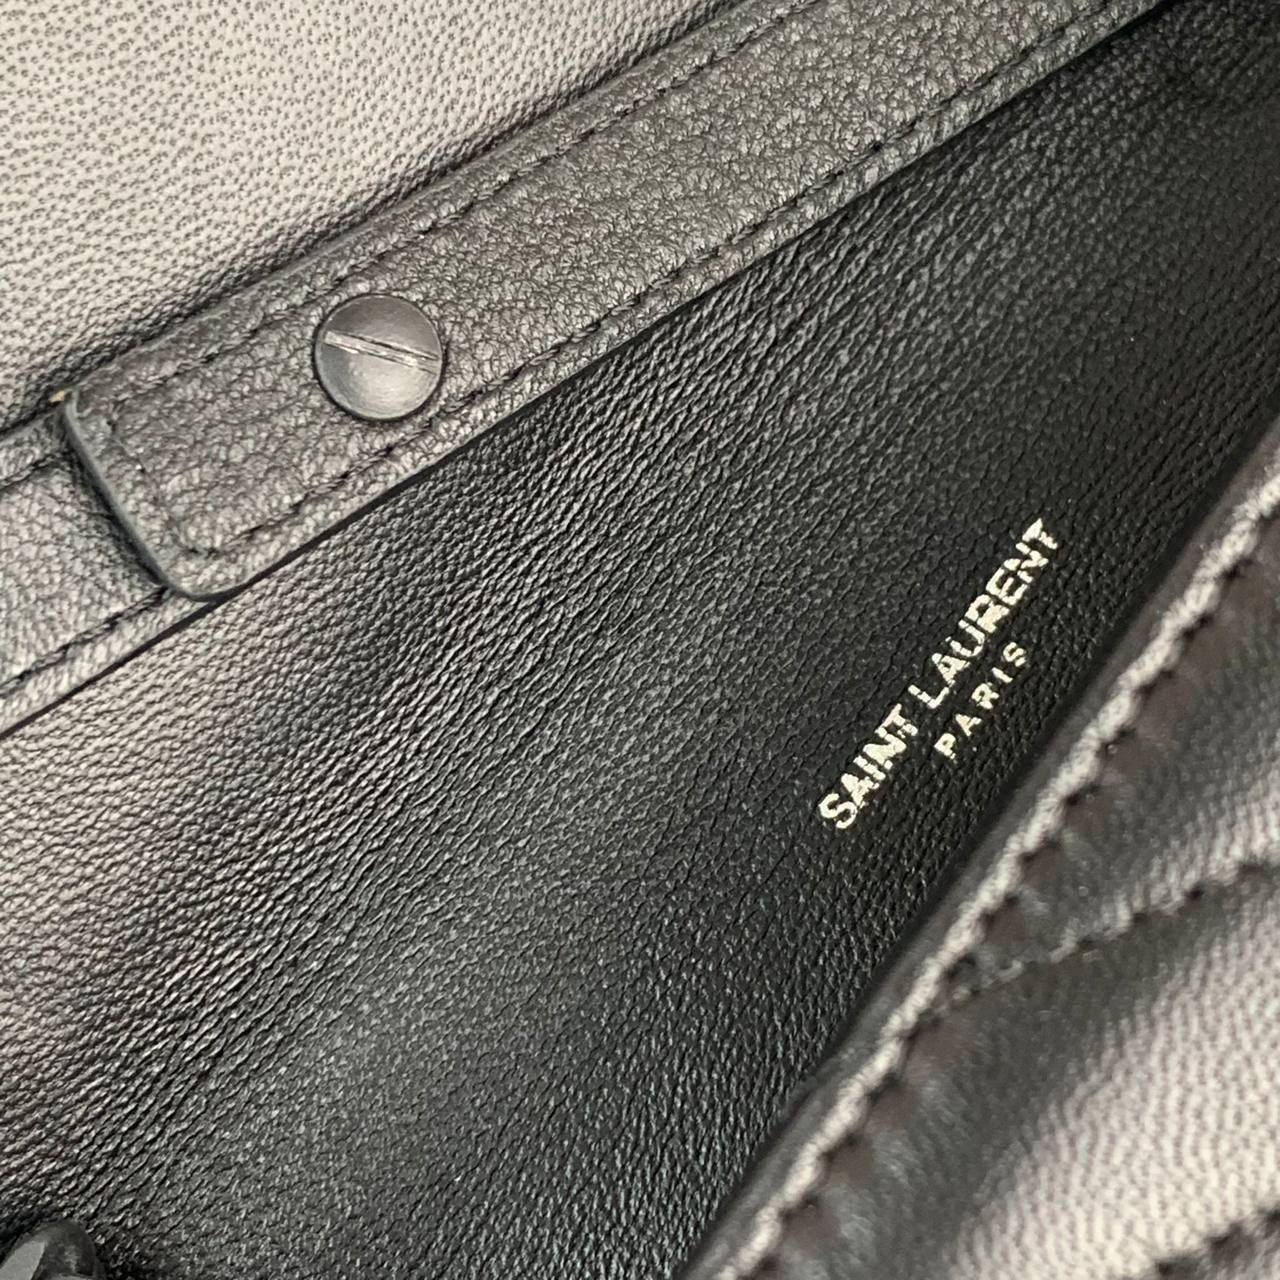 Yves Saint Laurent (YSL) Quilted Shoulder Bag 100% genuine leather Clutch.